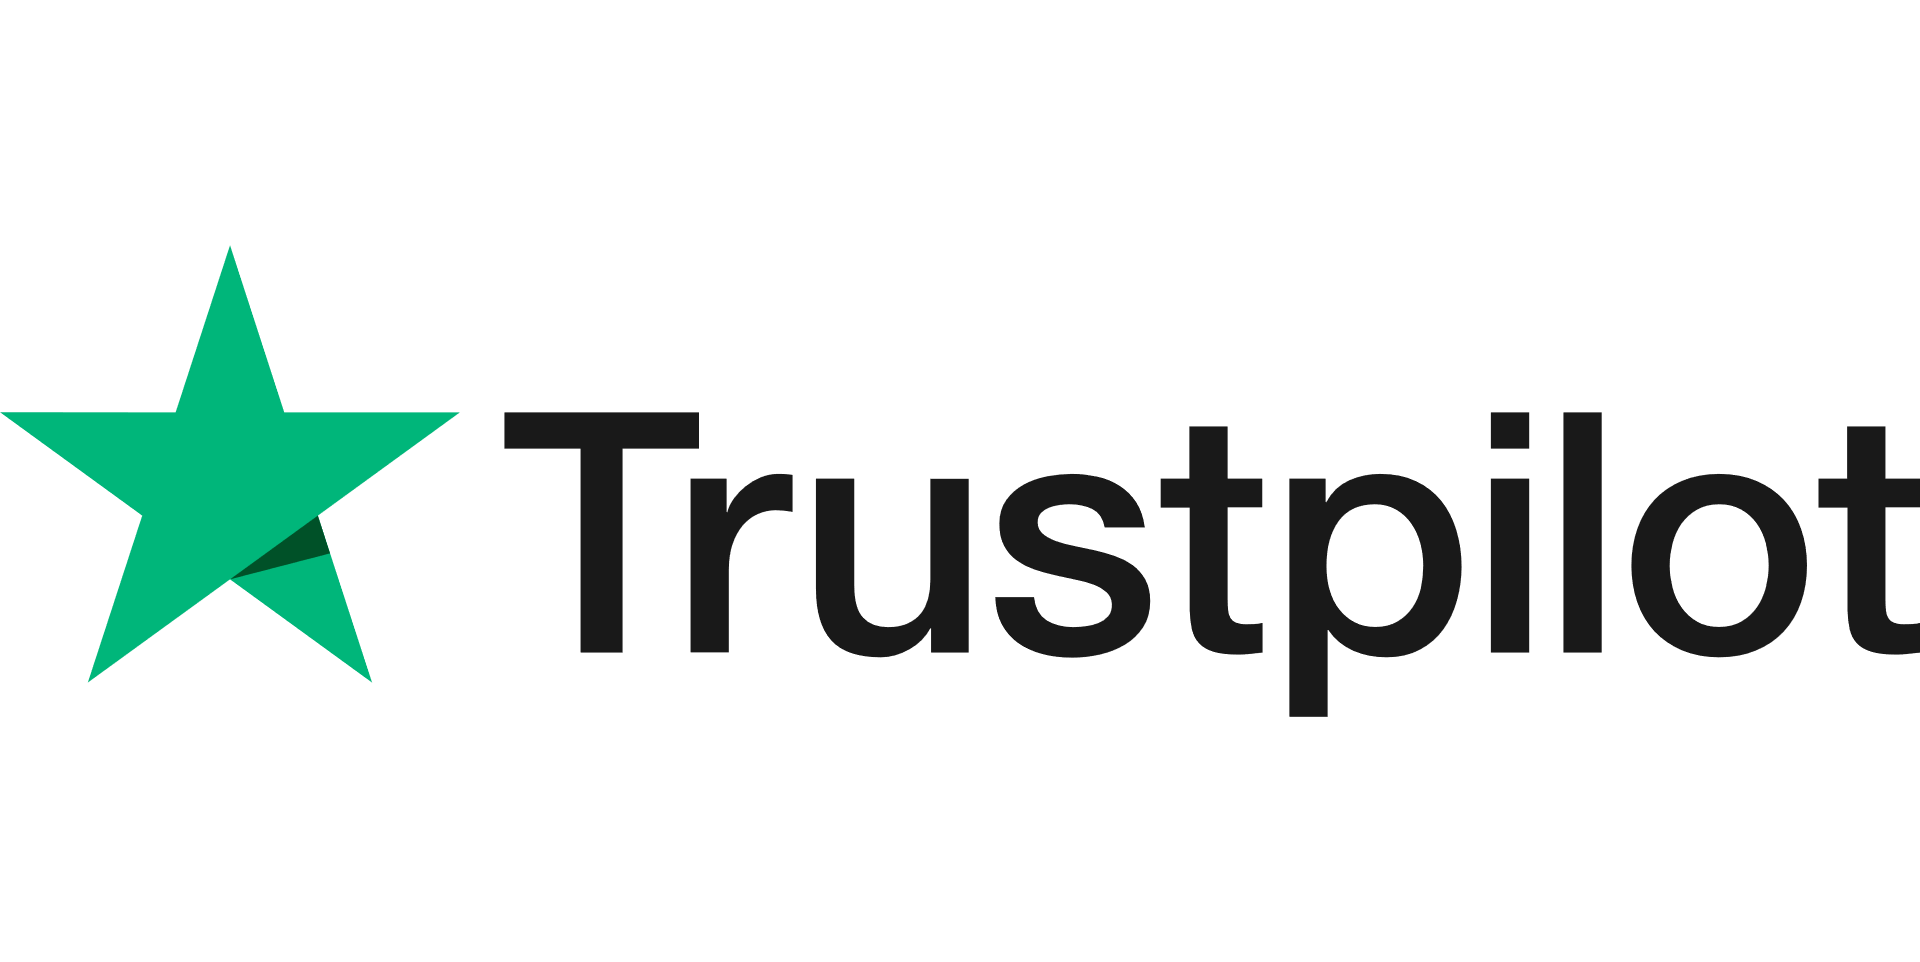 Trust pilot logo